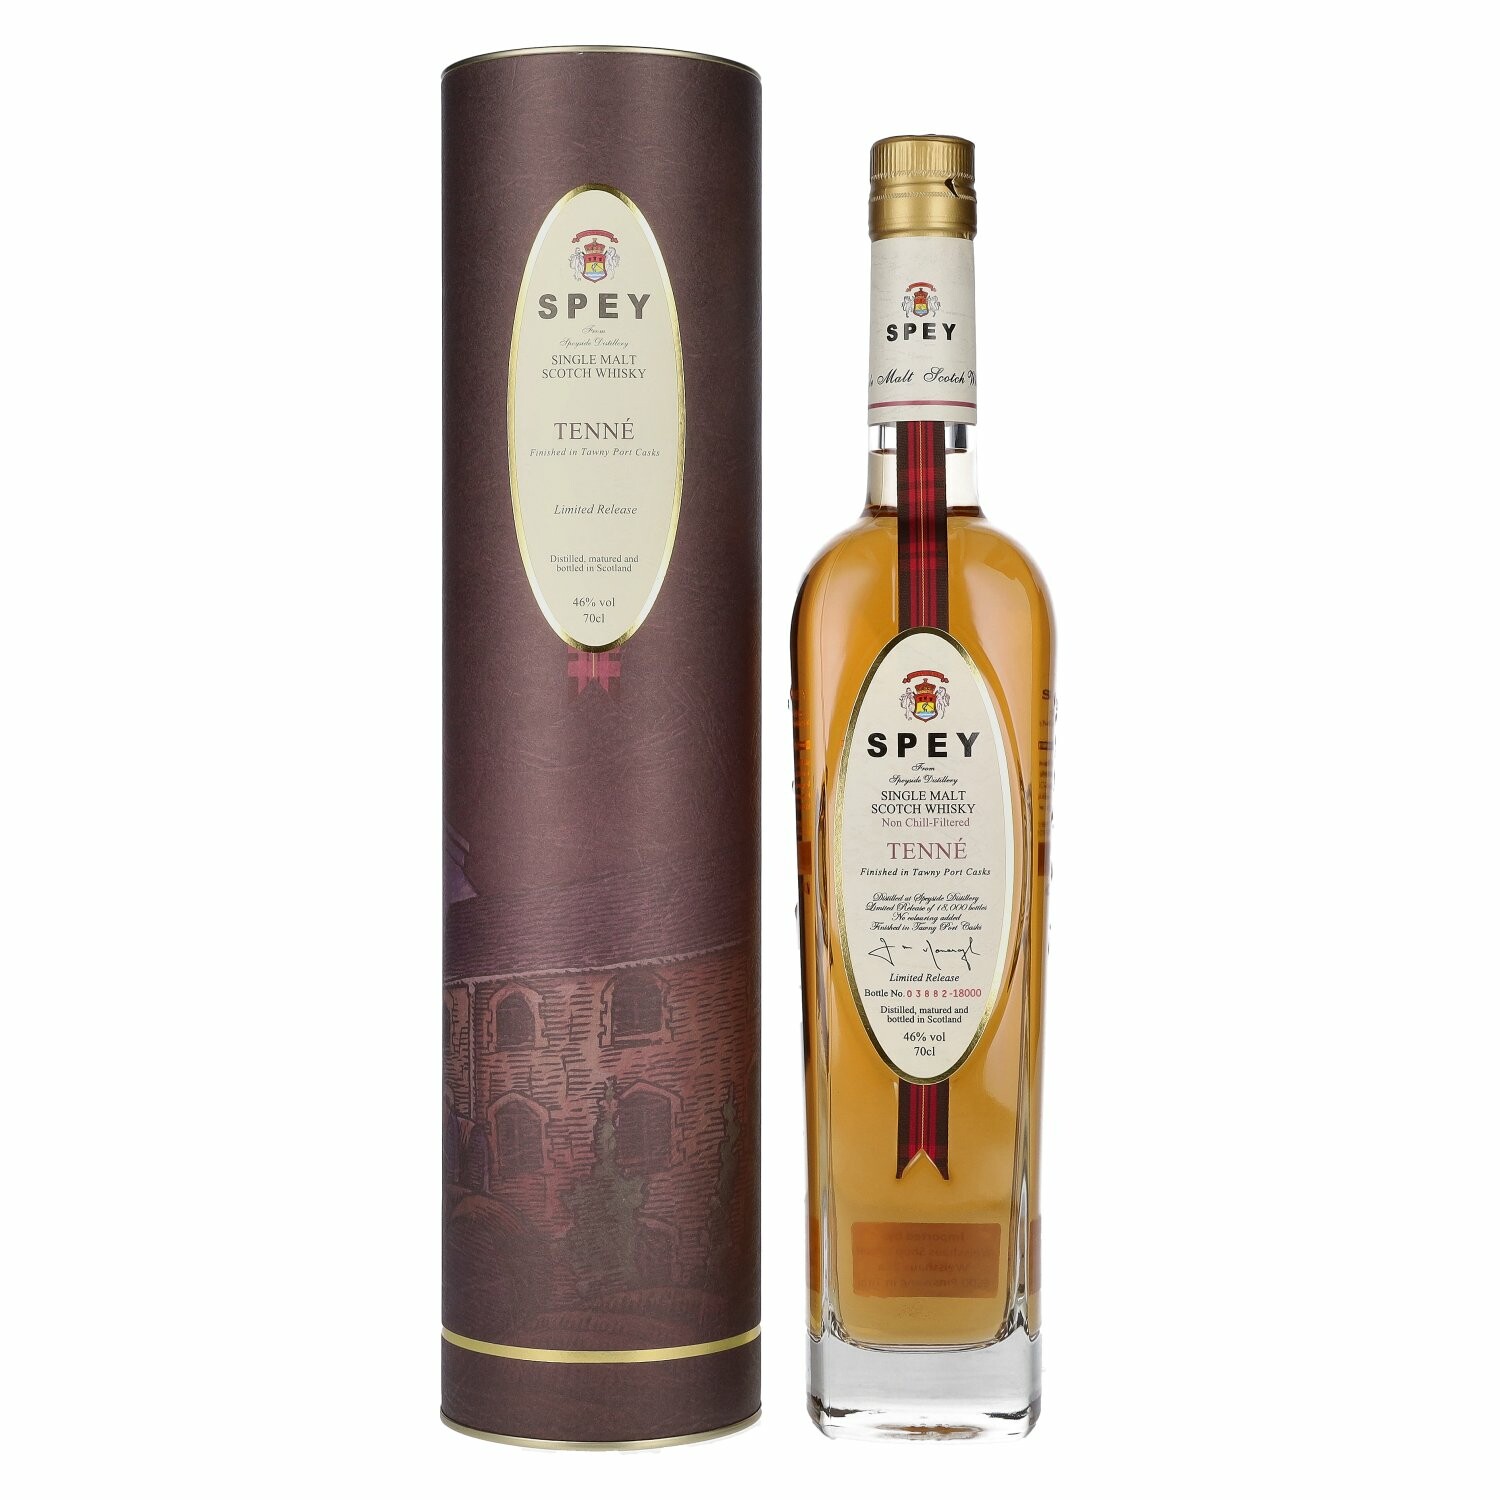 Spey TENNÉ Tawny Port Casks Single Malt Scotch Whisky 46% Vol. 0,7l in Giftbox